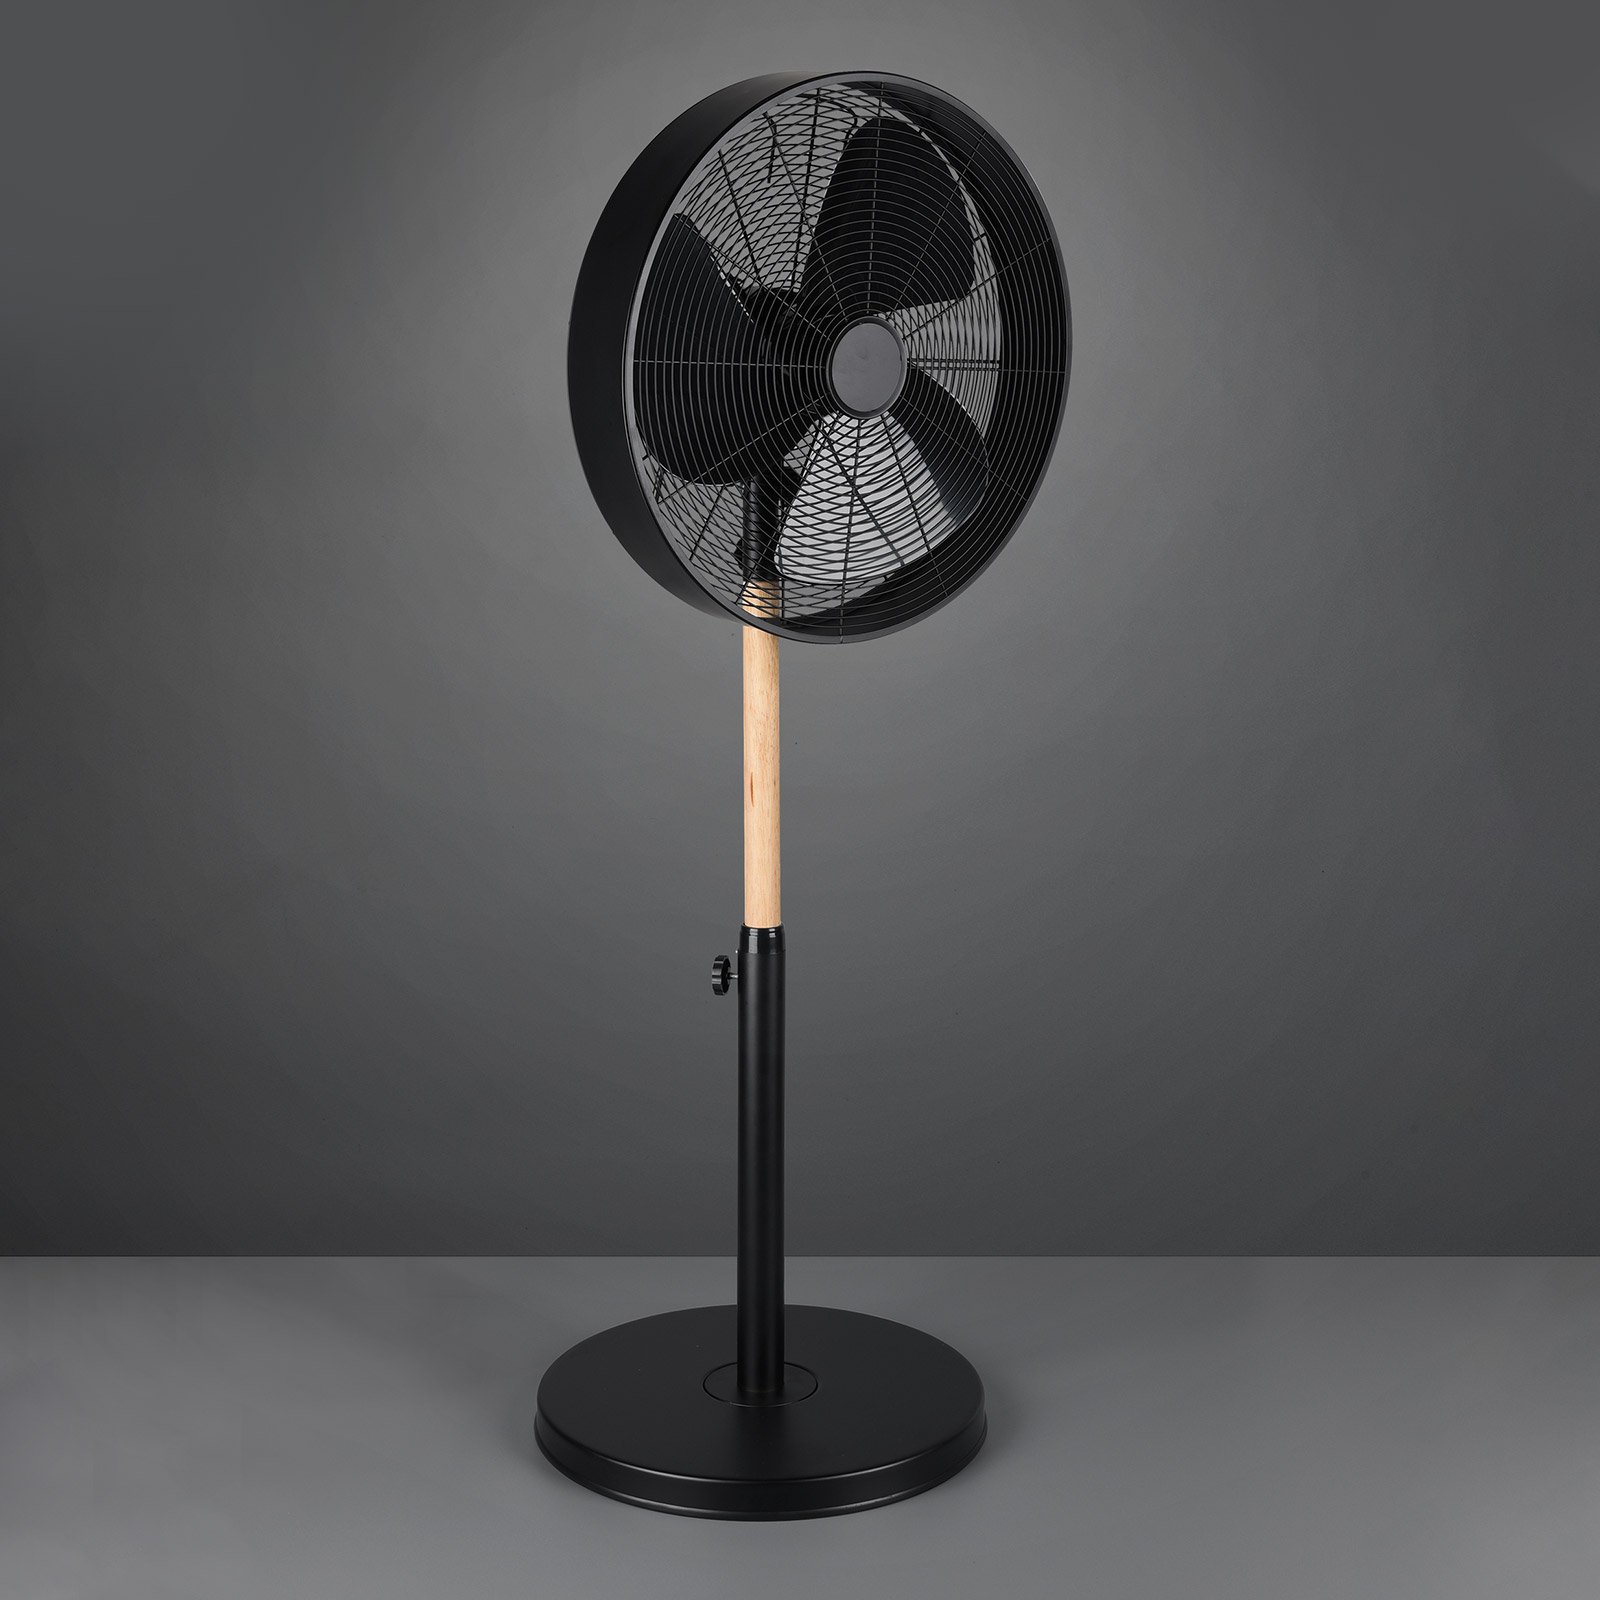 Viking pedestal fan, black with a wooden element